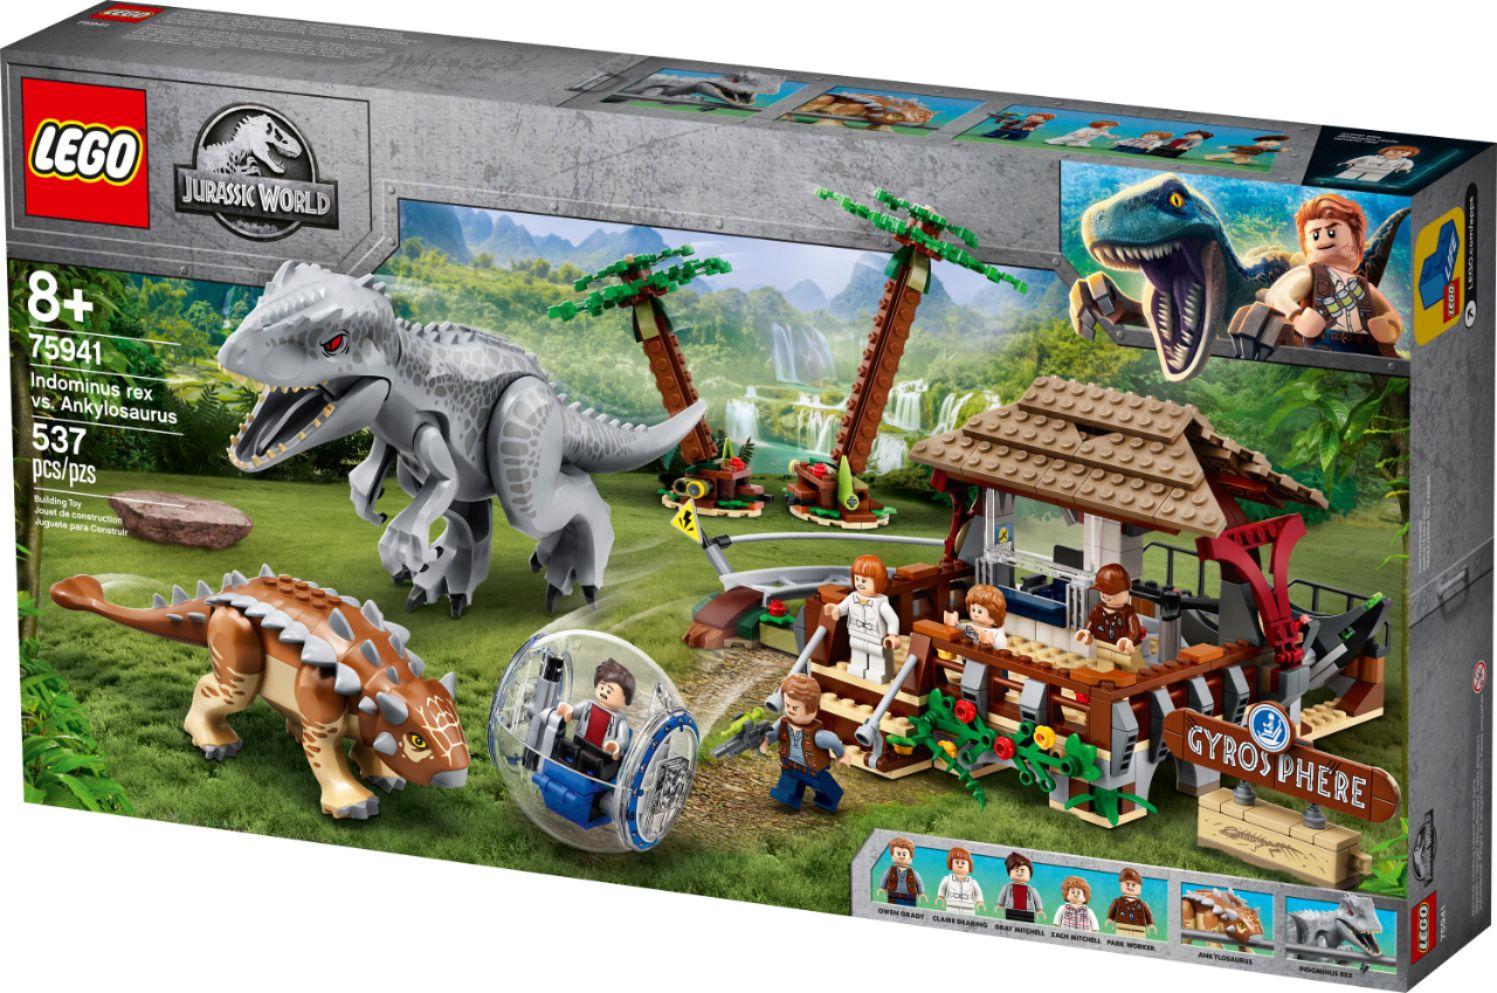 LEGO Indominus Rex vs for sale online Ankylosaurus Jurassic World 75941